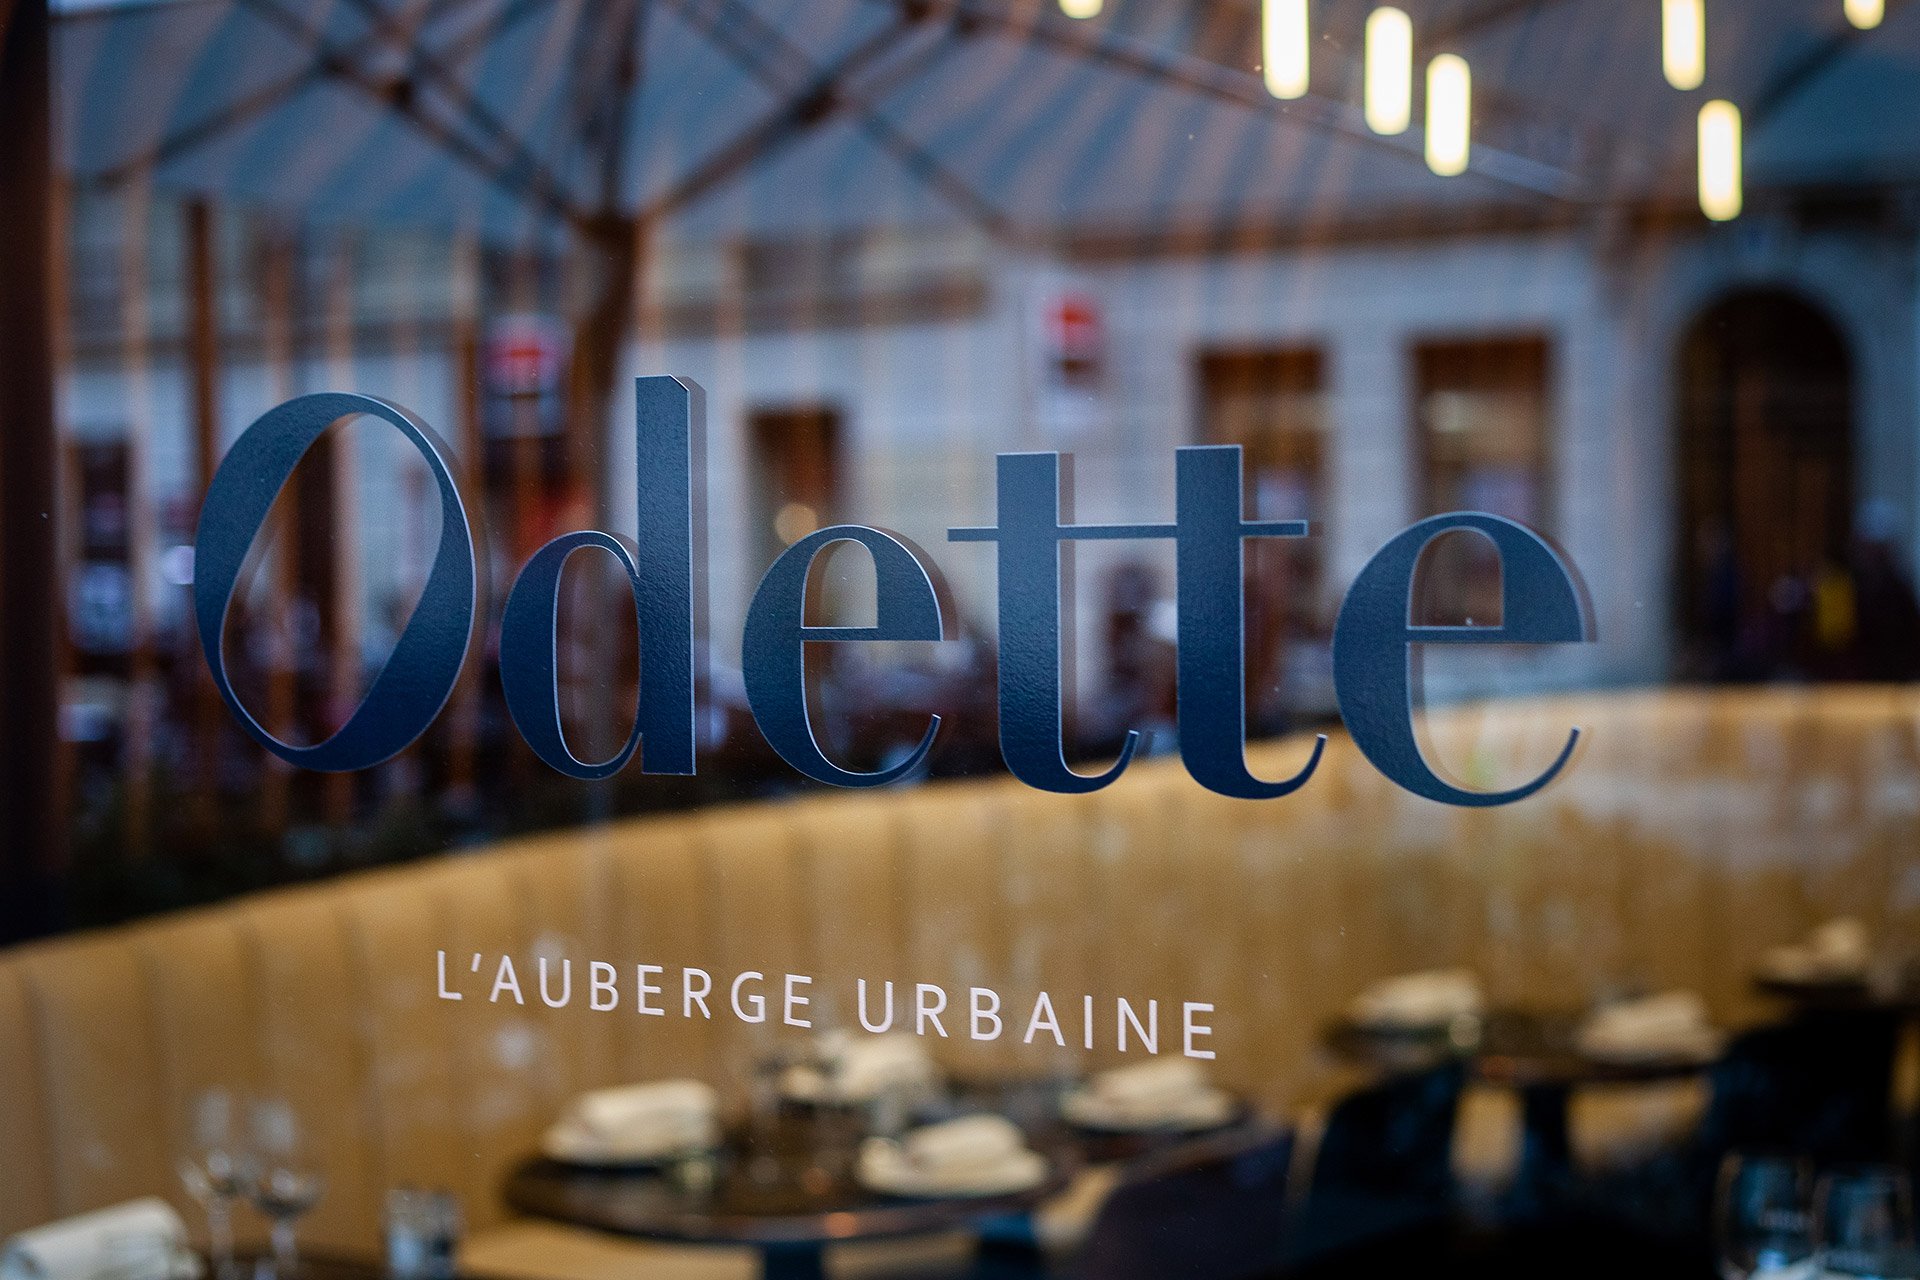 Restaurant Odette, l'Auberge Urbaine